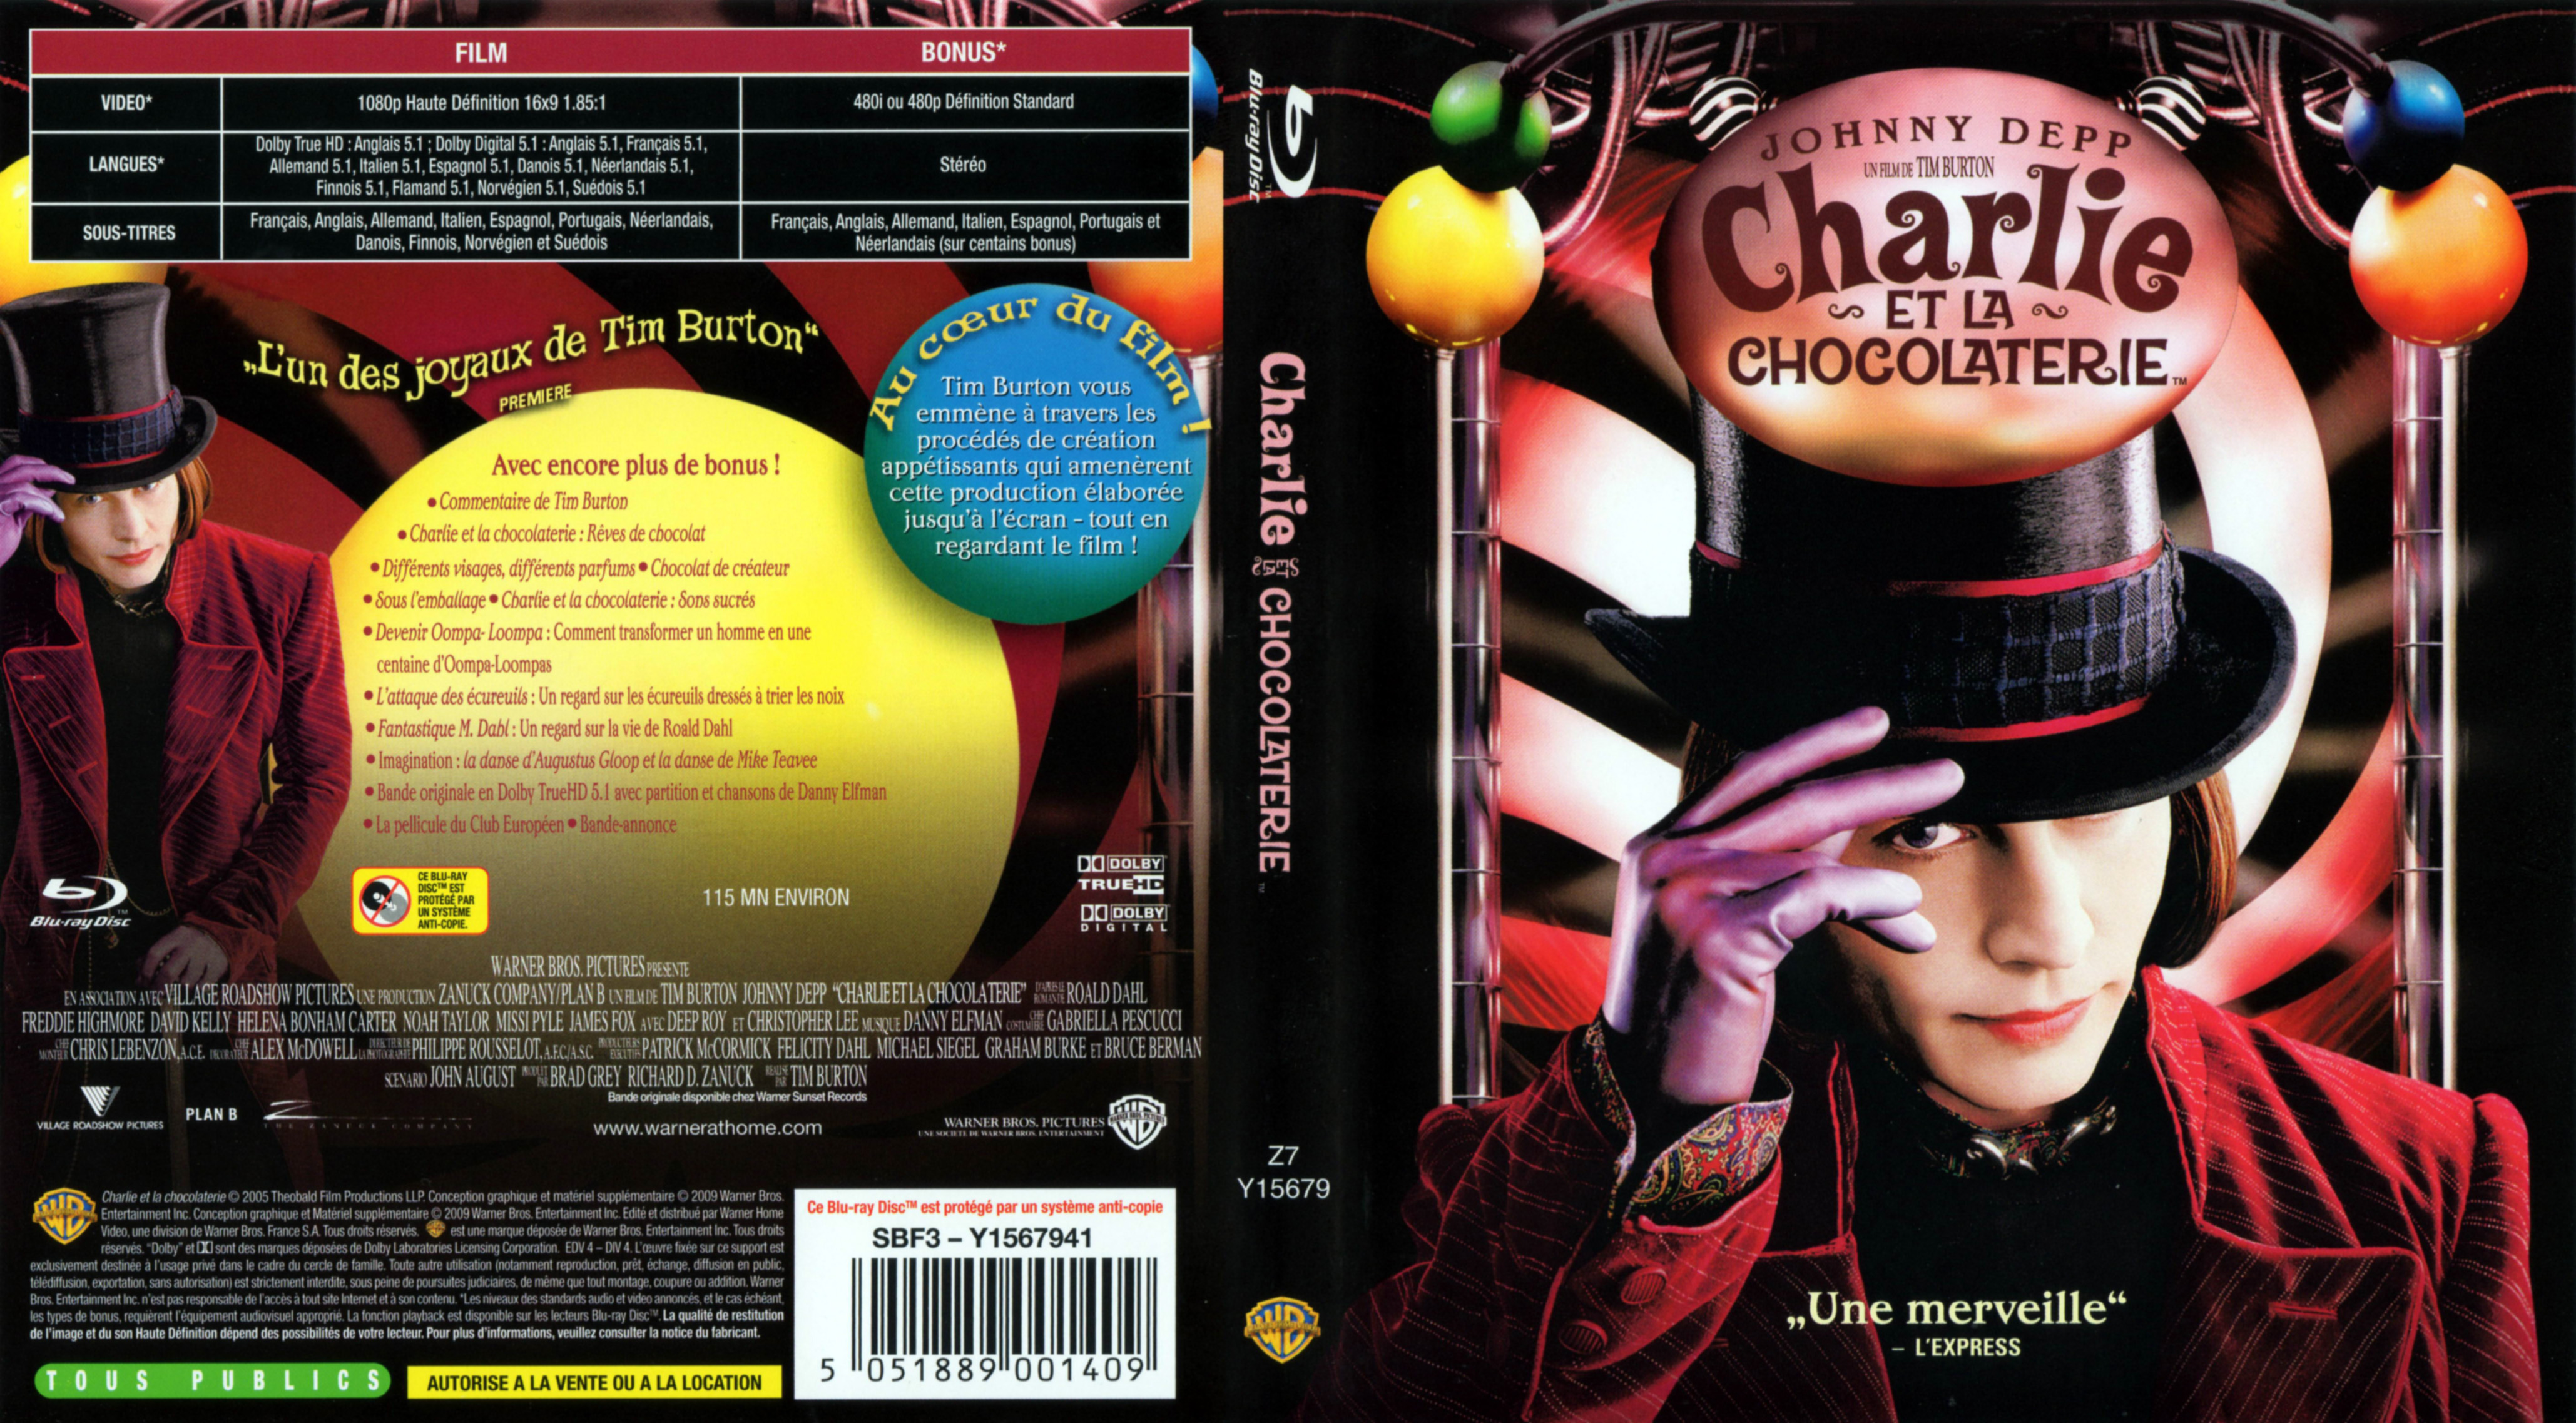 Jaquette DVD Charlie et la chocolaterie (2005) (BLU-RAY)